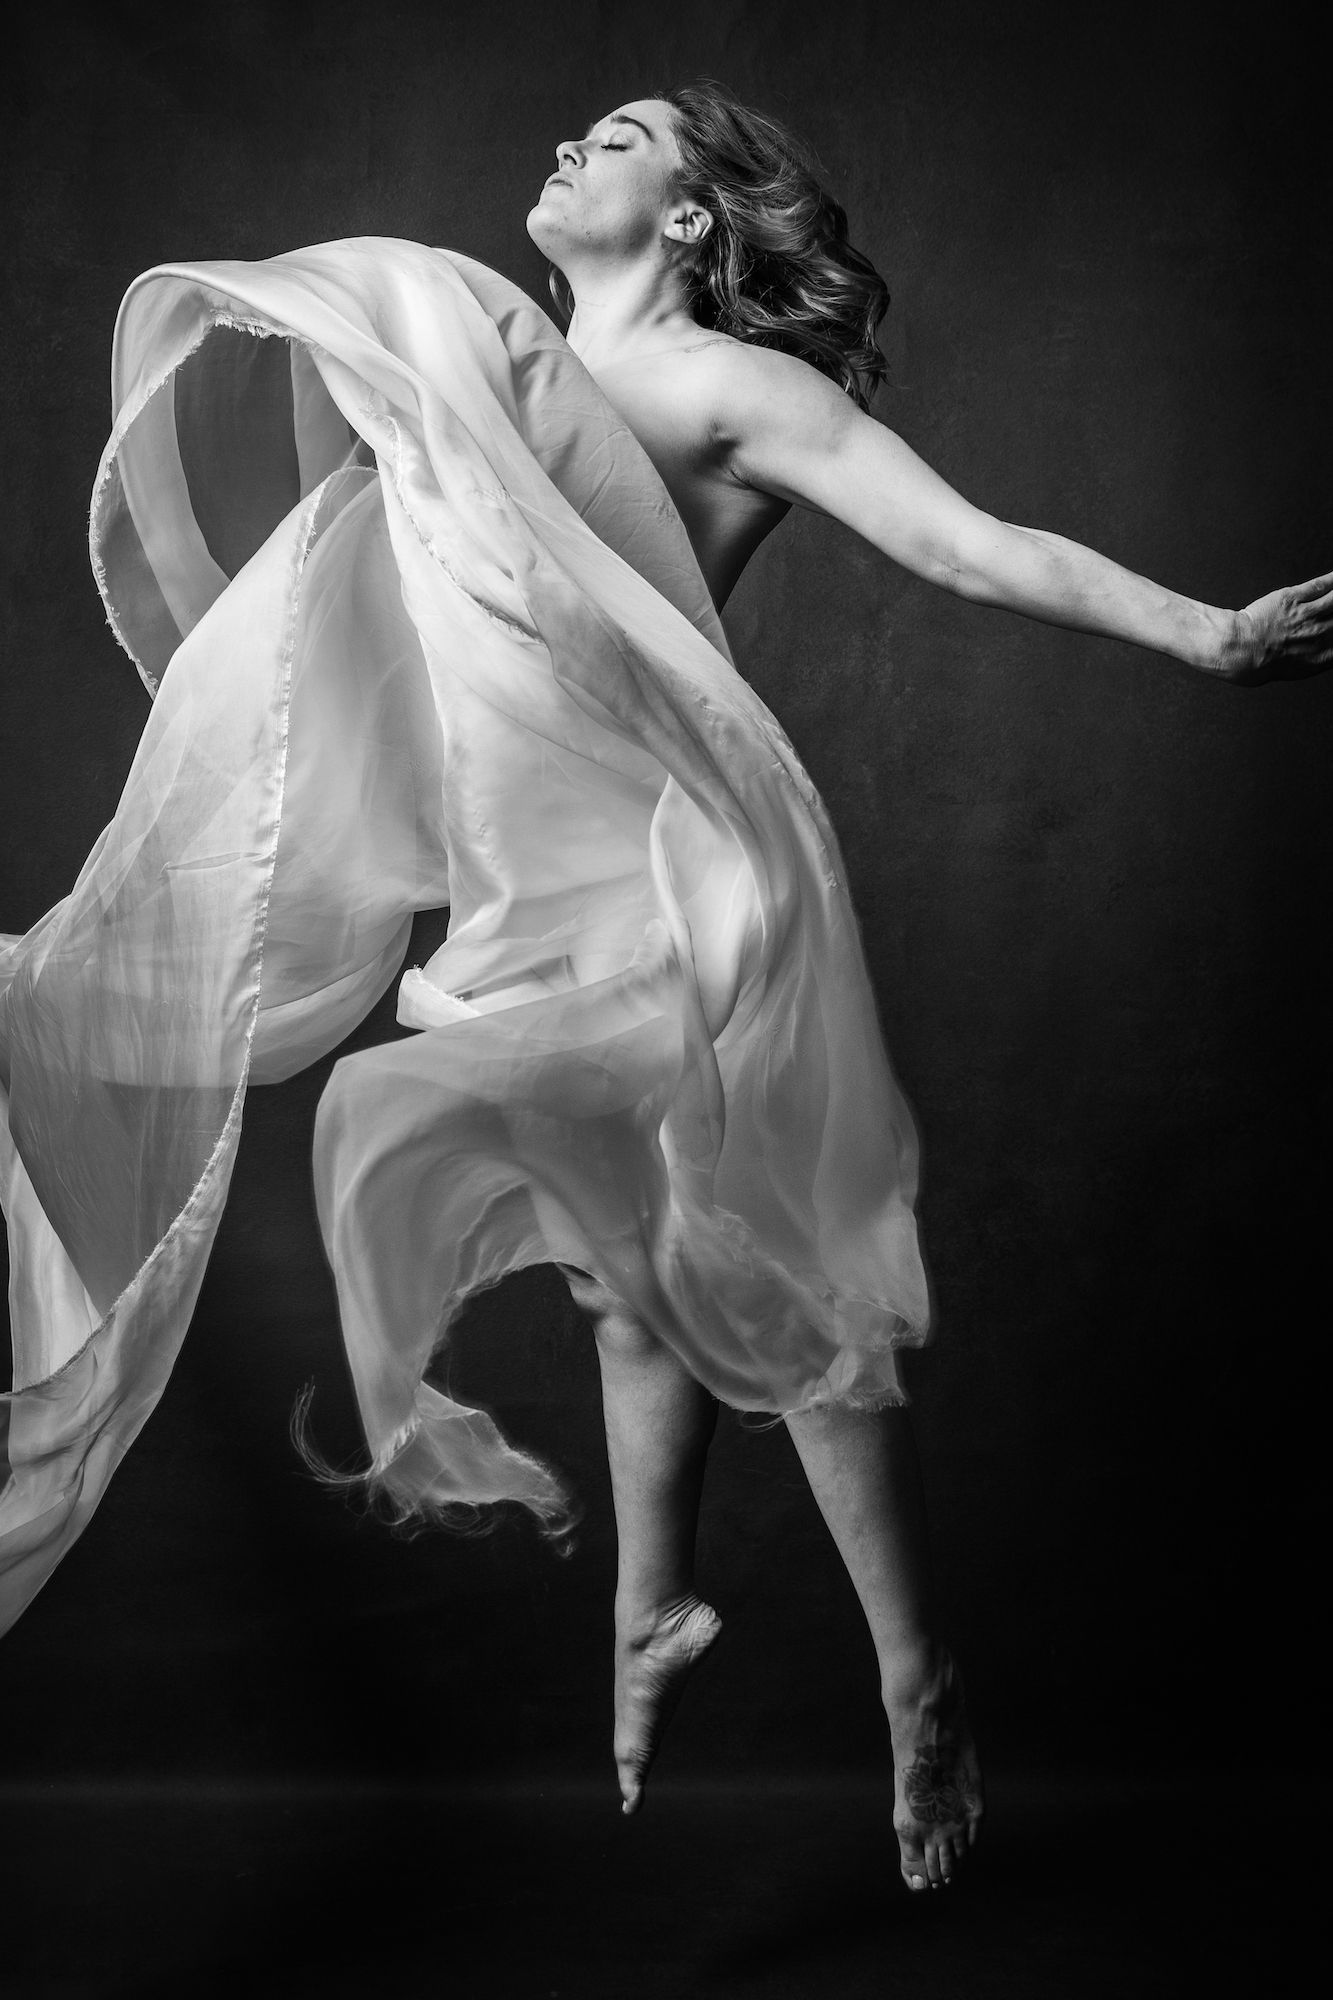 Woman in white dress jumping joyfully.